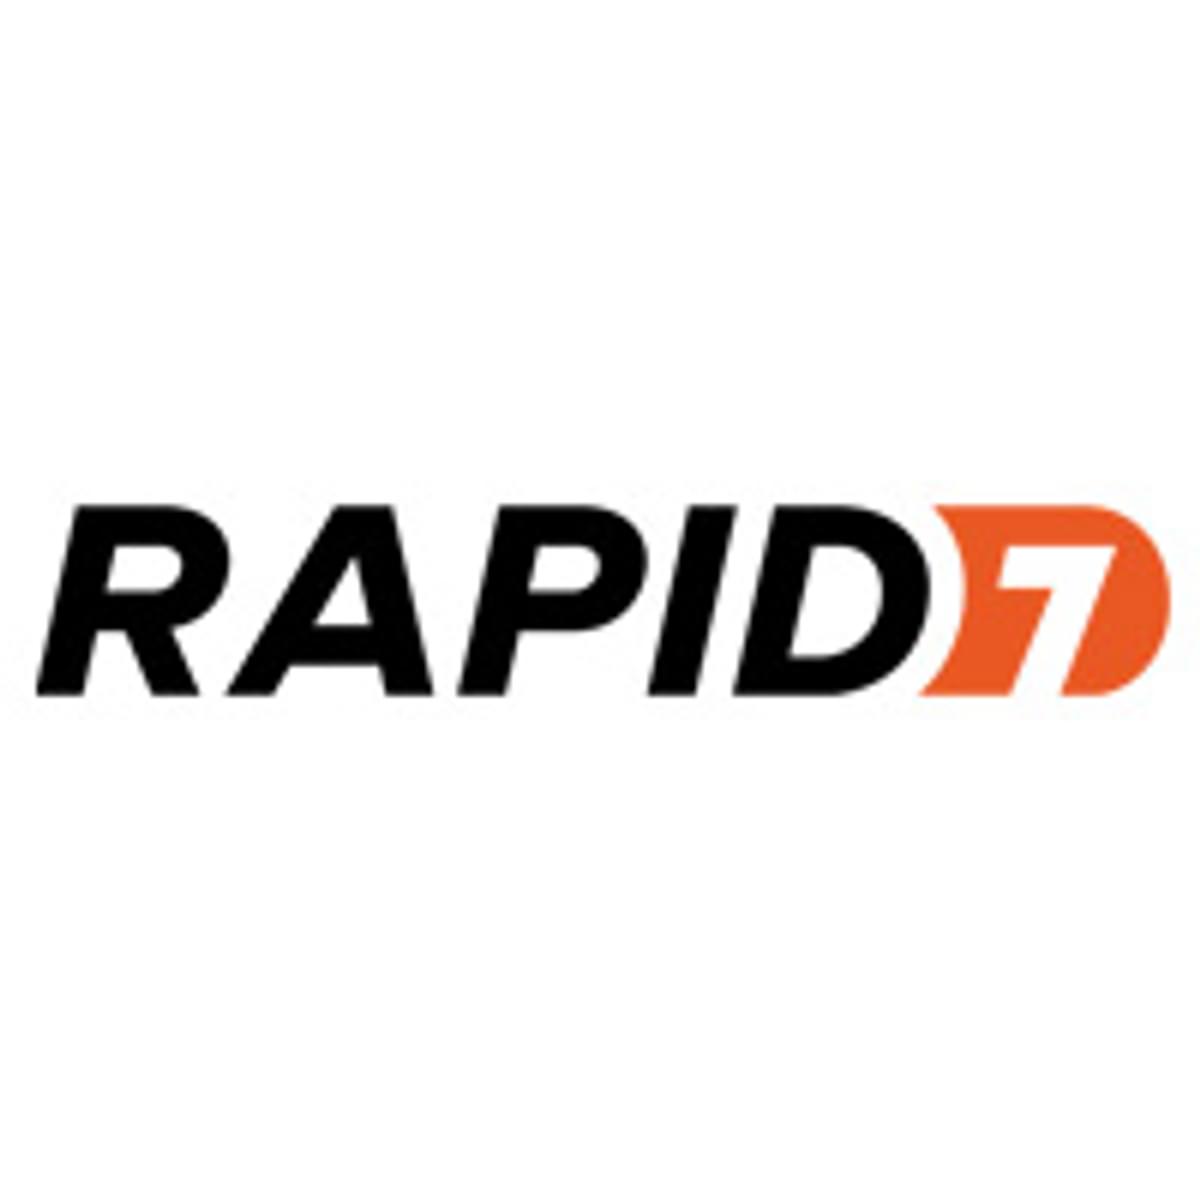 Rapid7 neemt Threat Intelligence specialist IntSights over image